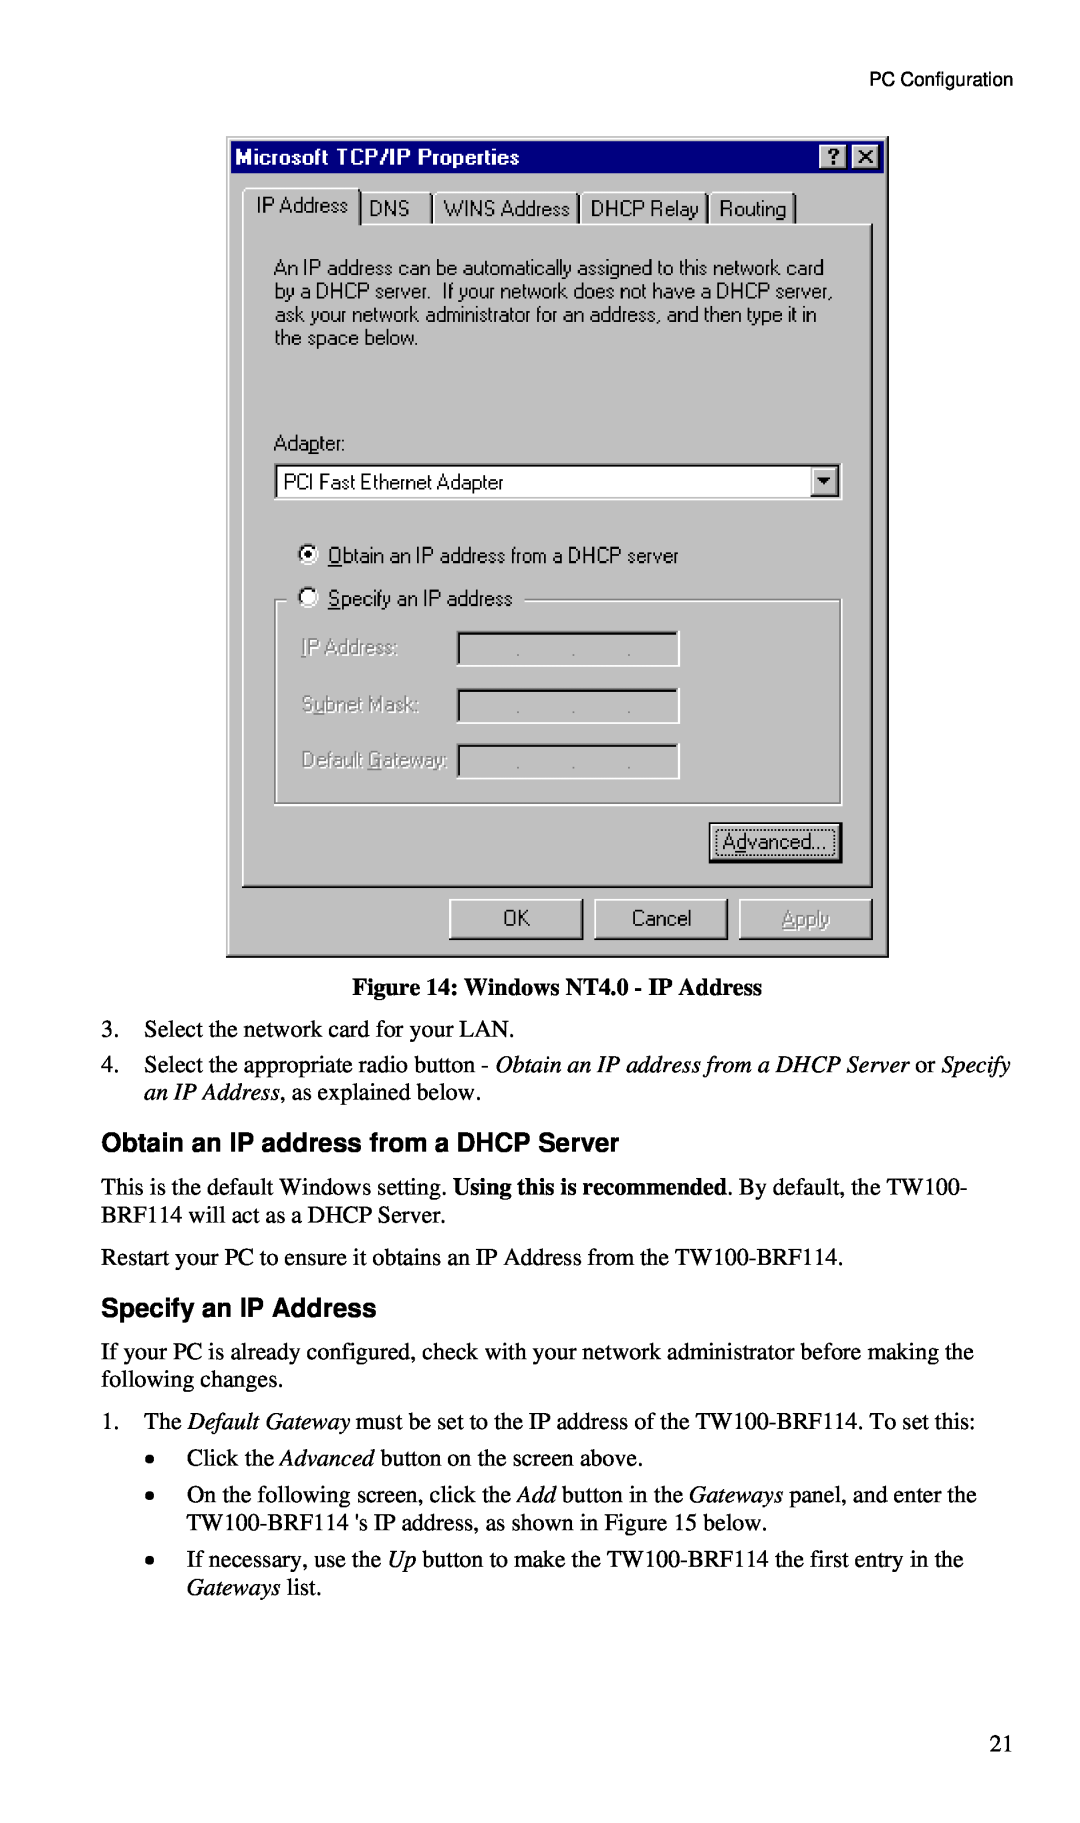 TRENDnet BRF114 manual Obtain an IP address from a DHCP Server, Specify an IP Address, Windows NT4.0 - IP Address 